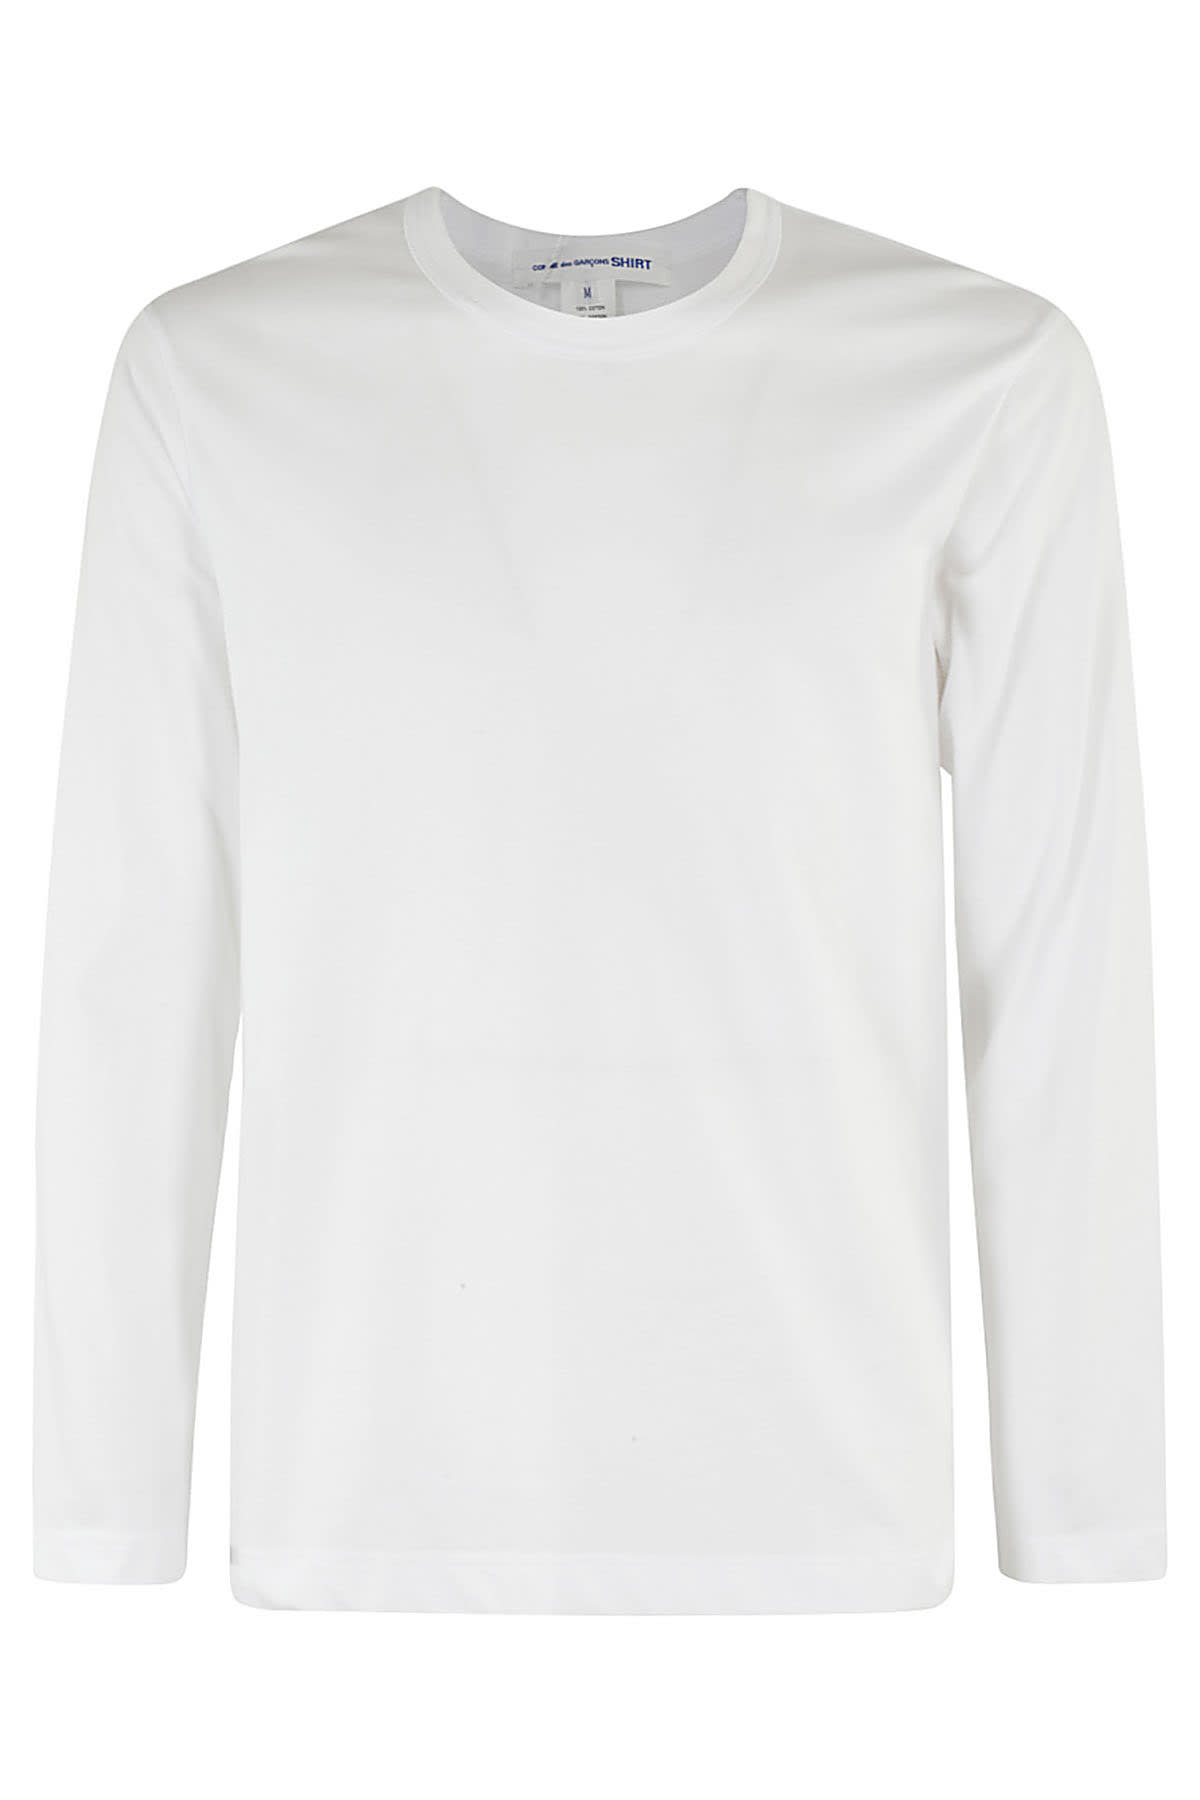 Comme Des Garçons Shirt T Shirt Knit In White